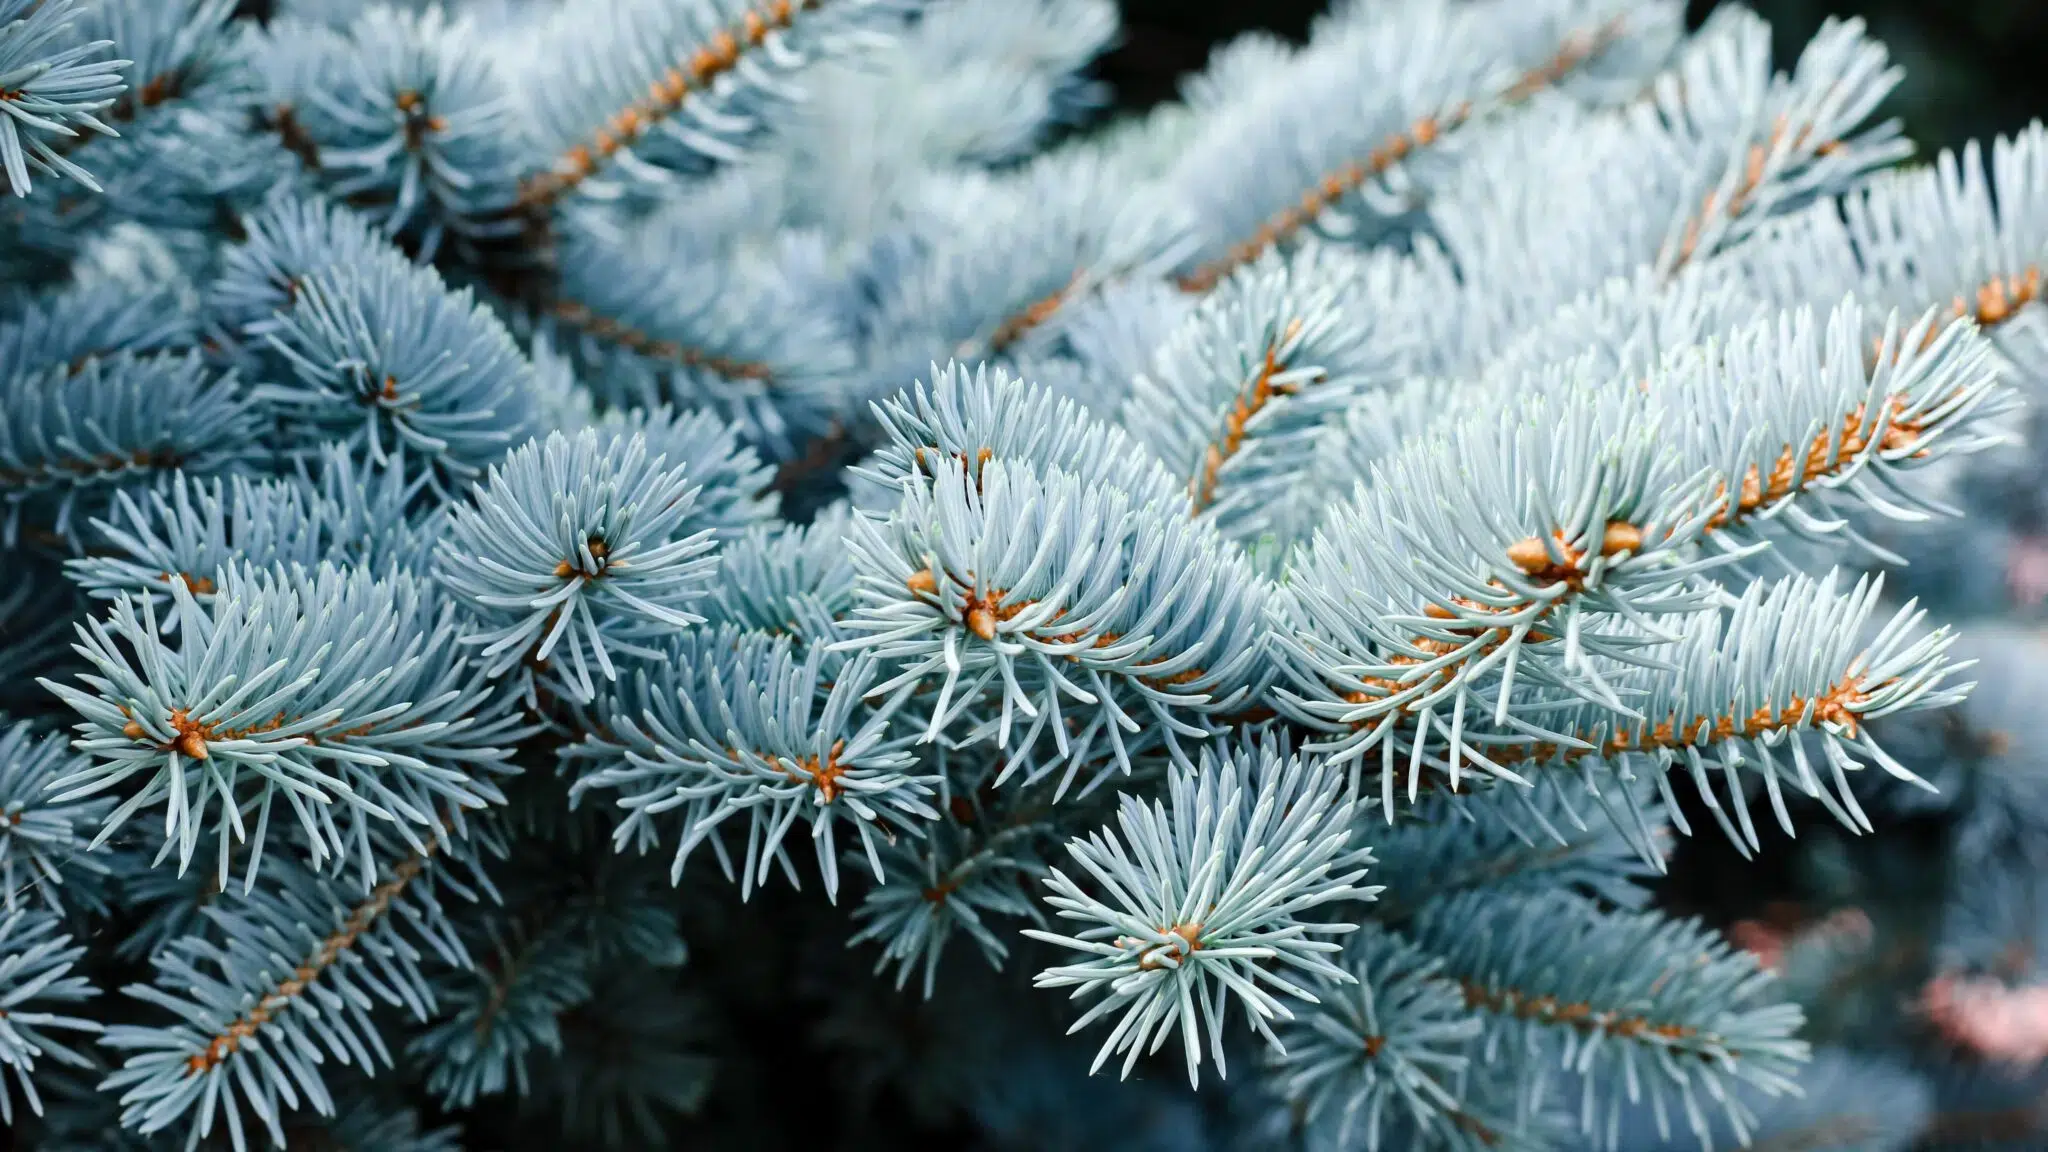 Foliage of Blue Spruce Christmas tree.